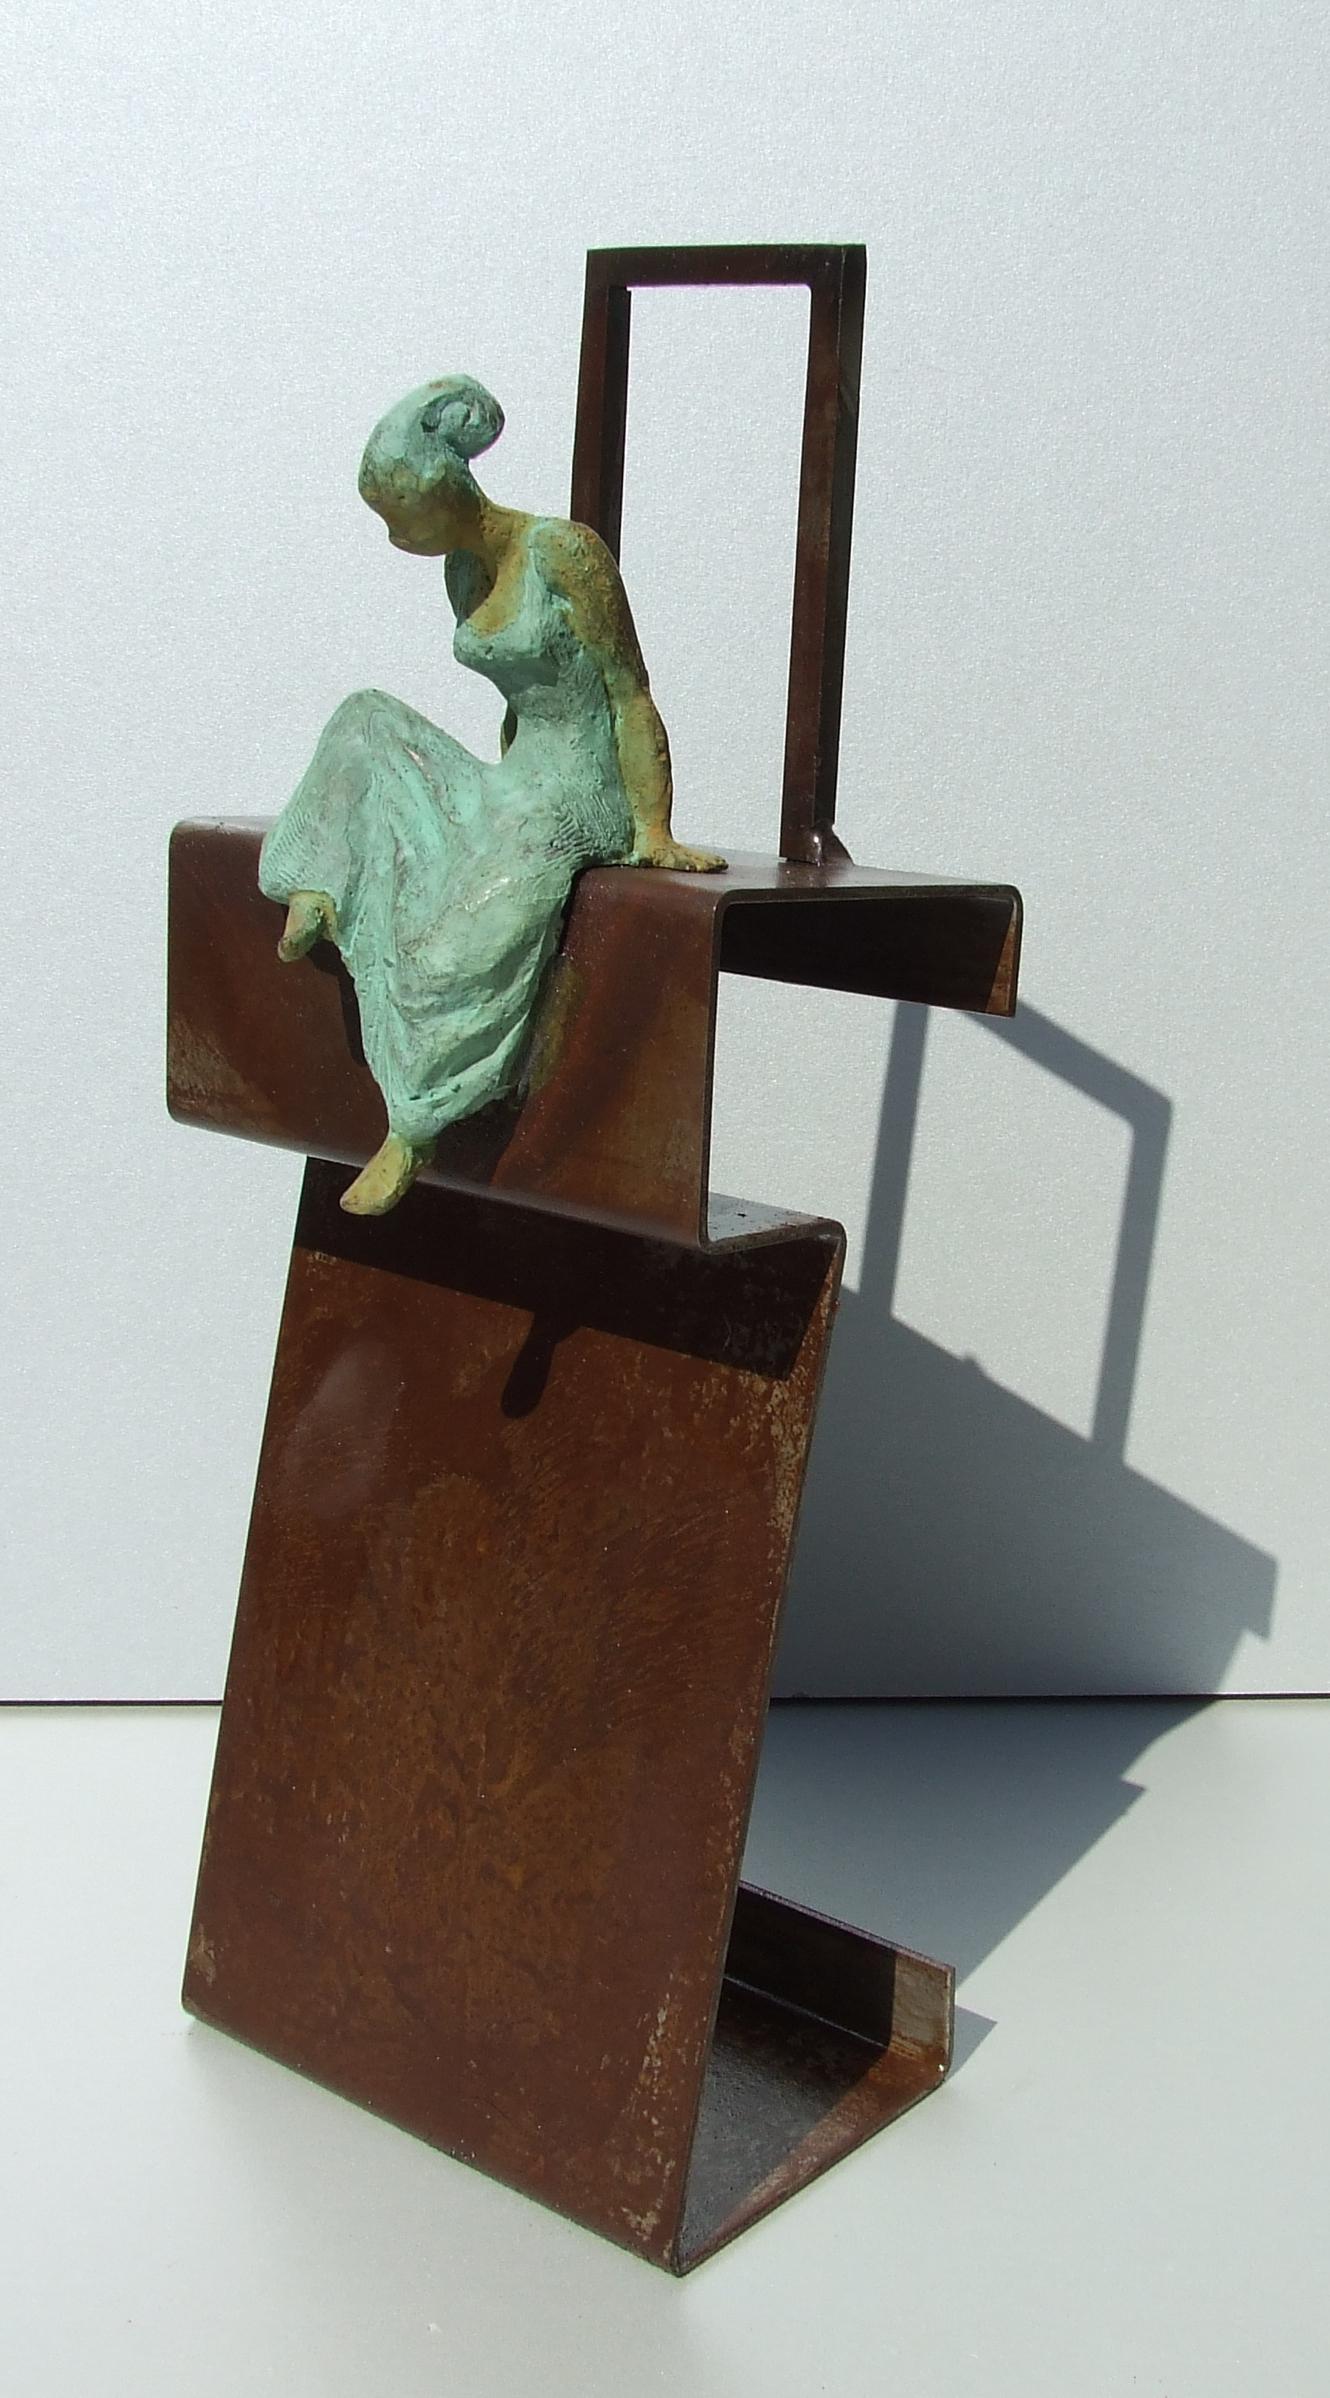 Joan Artigas Planas Figurative Sculpture - "Little Queen III" contemporary bronze table, mural sculpture figurative girl